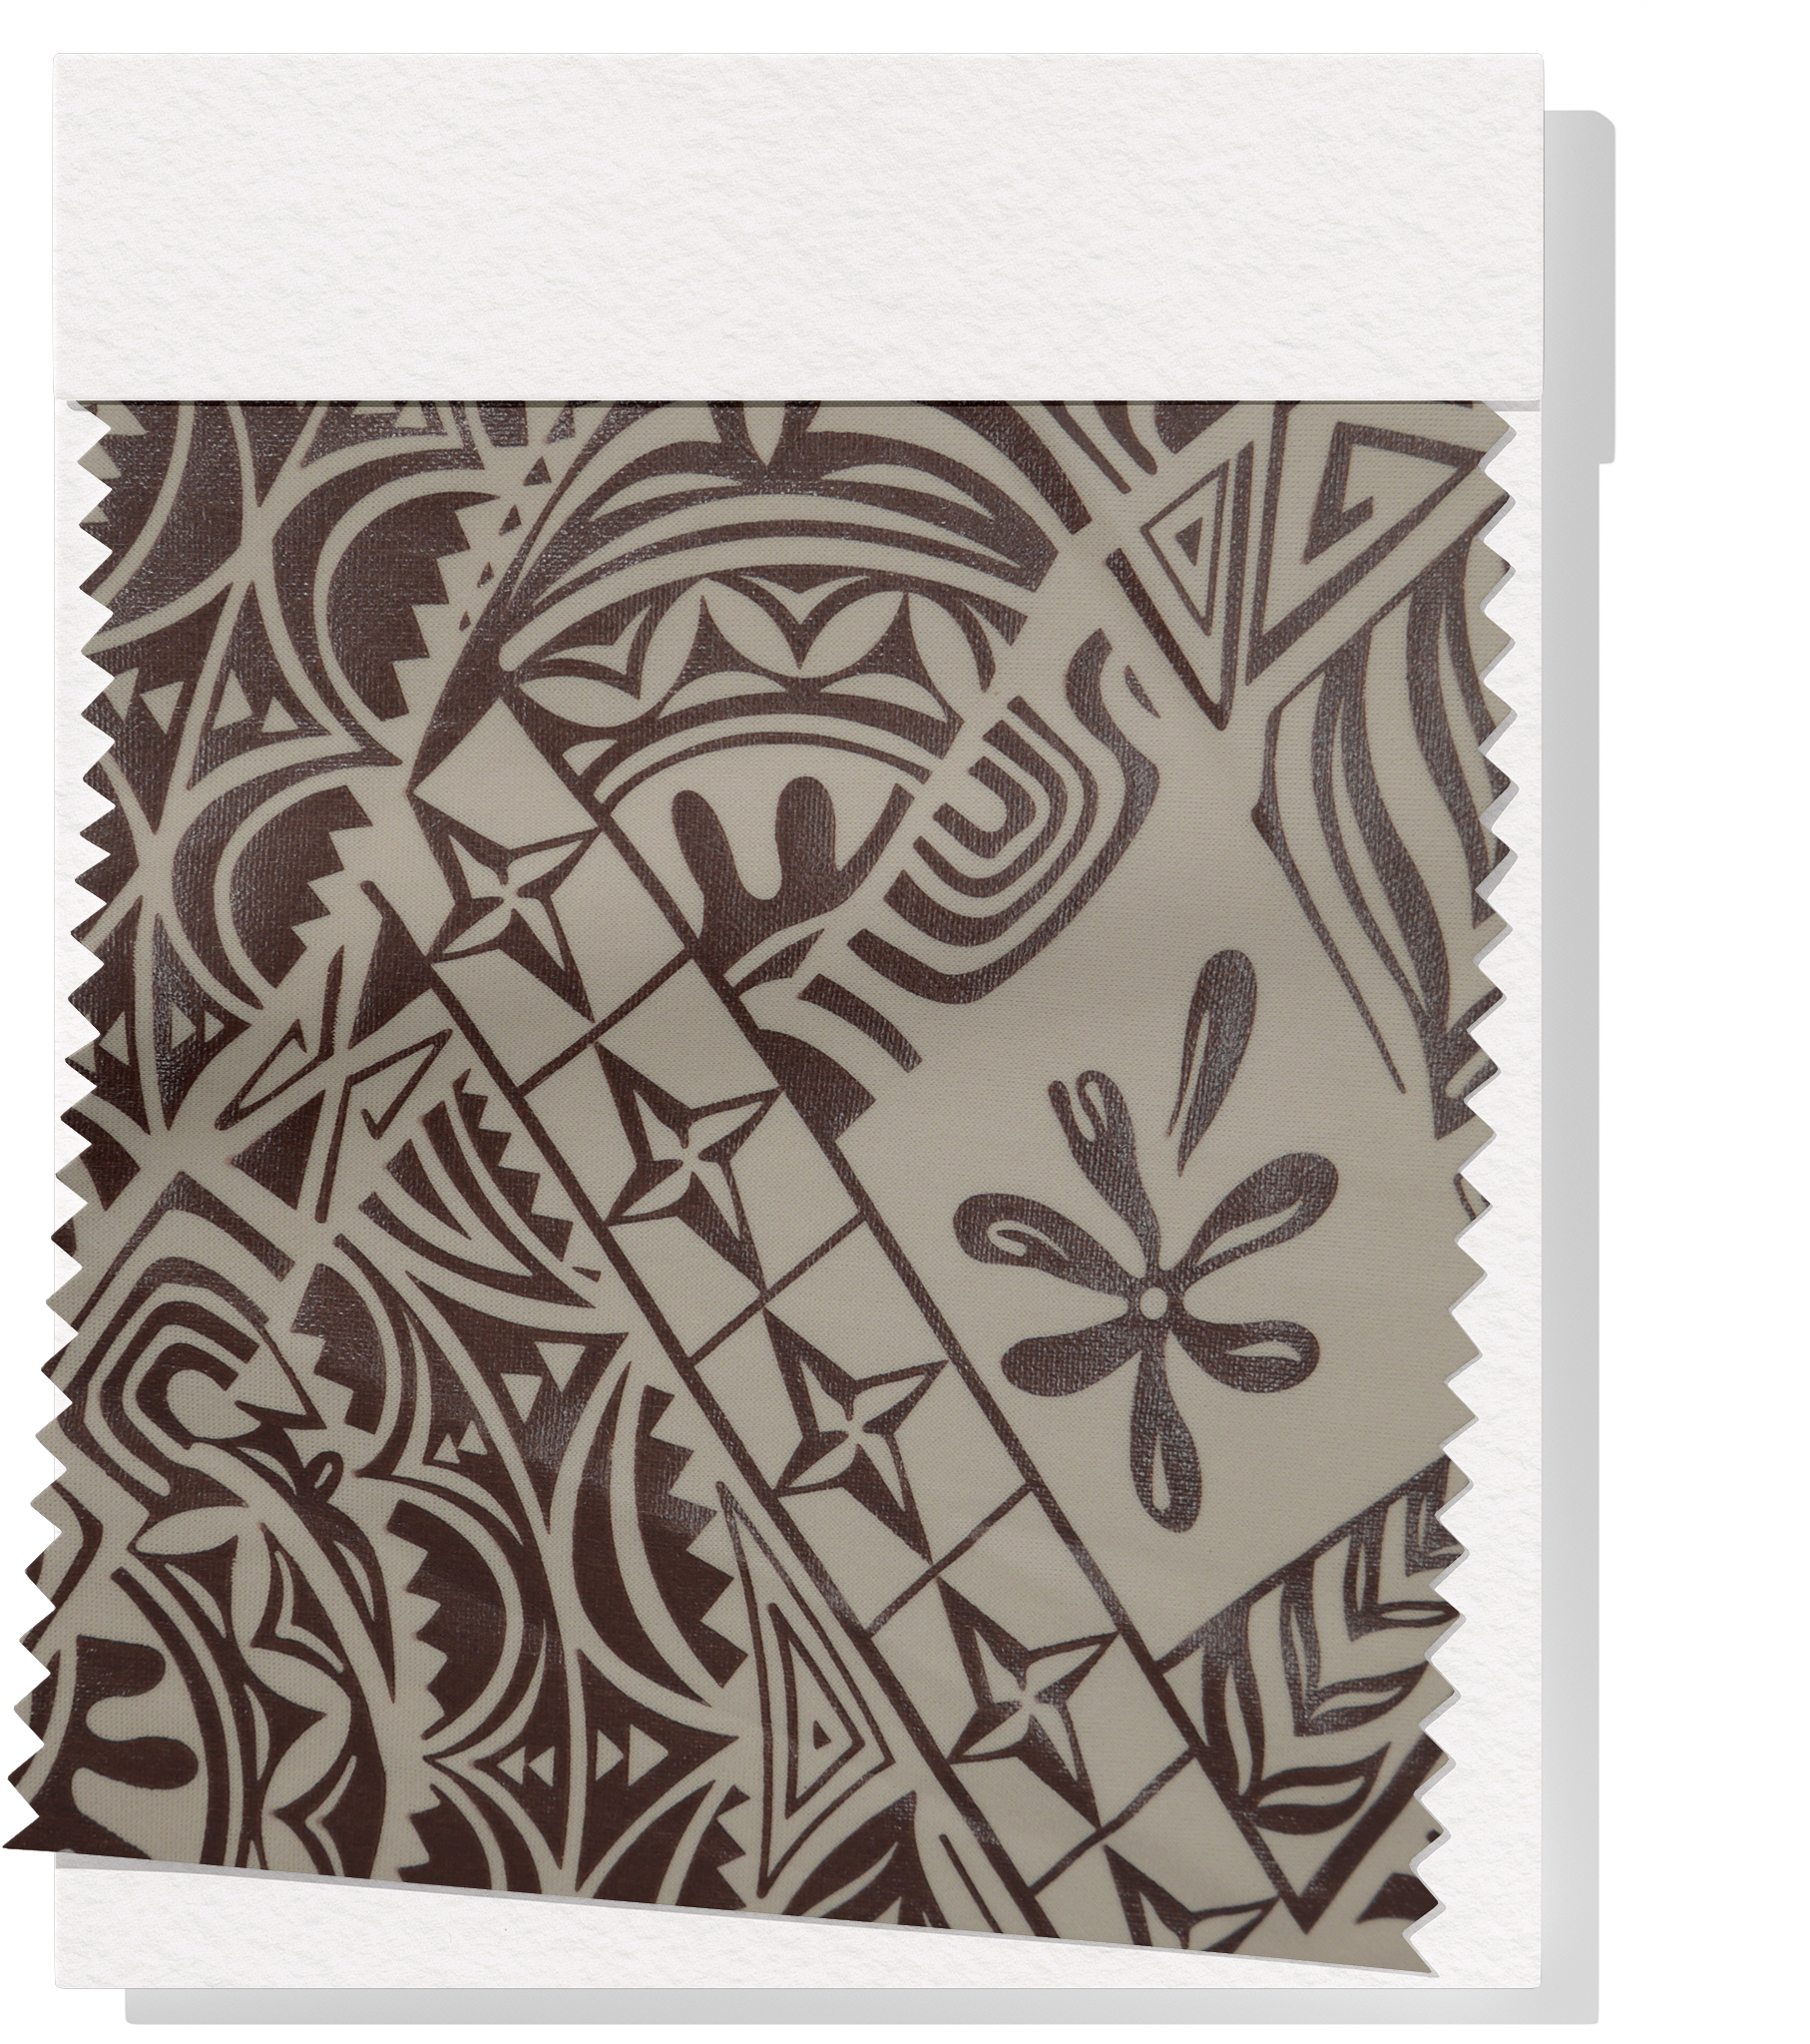 Stretch Polyester Pacific Print $12.00p/m Design #6 - Brown & Cream